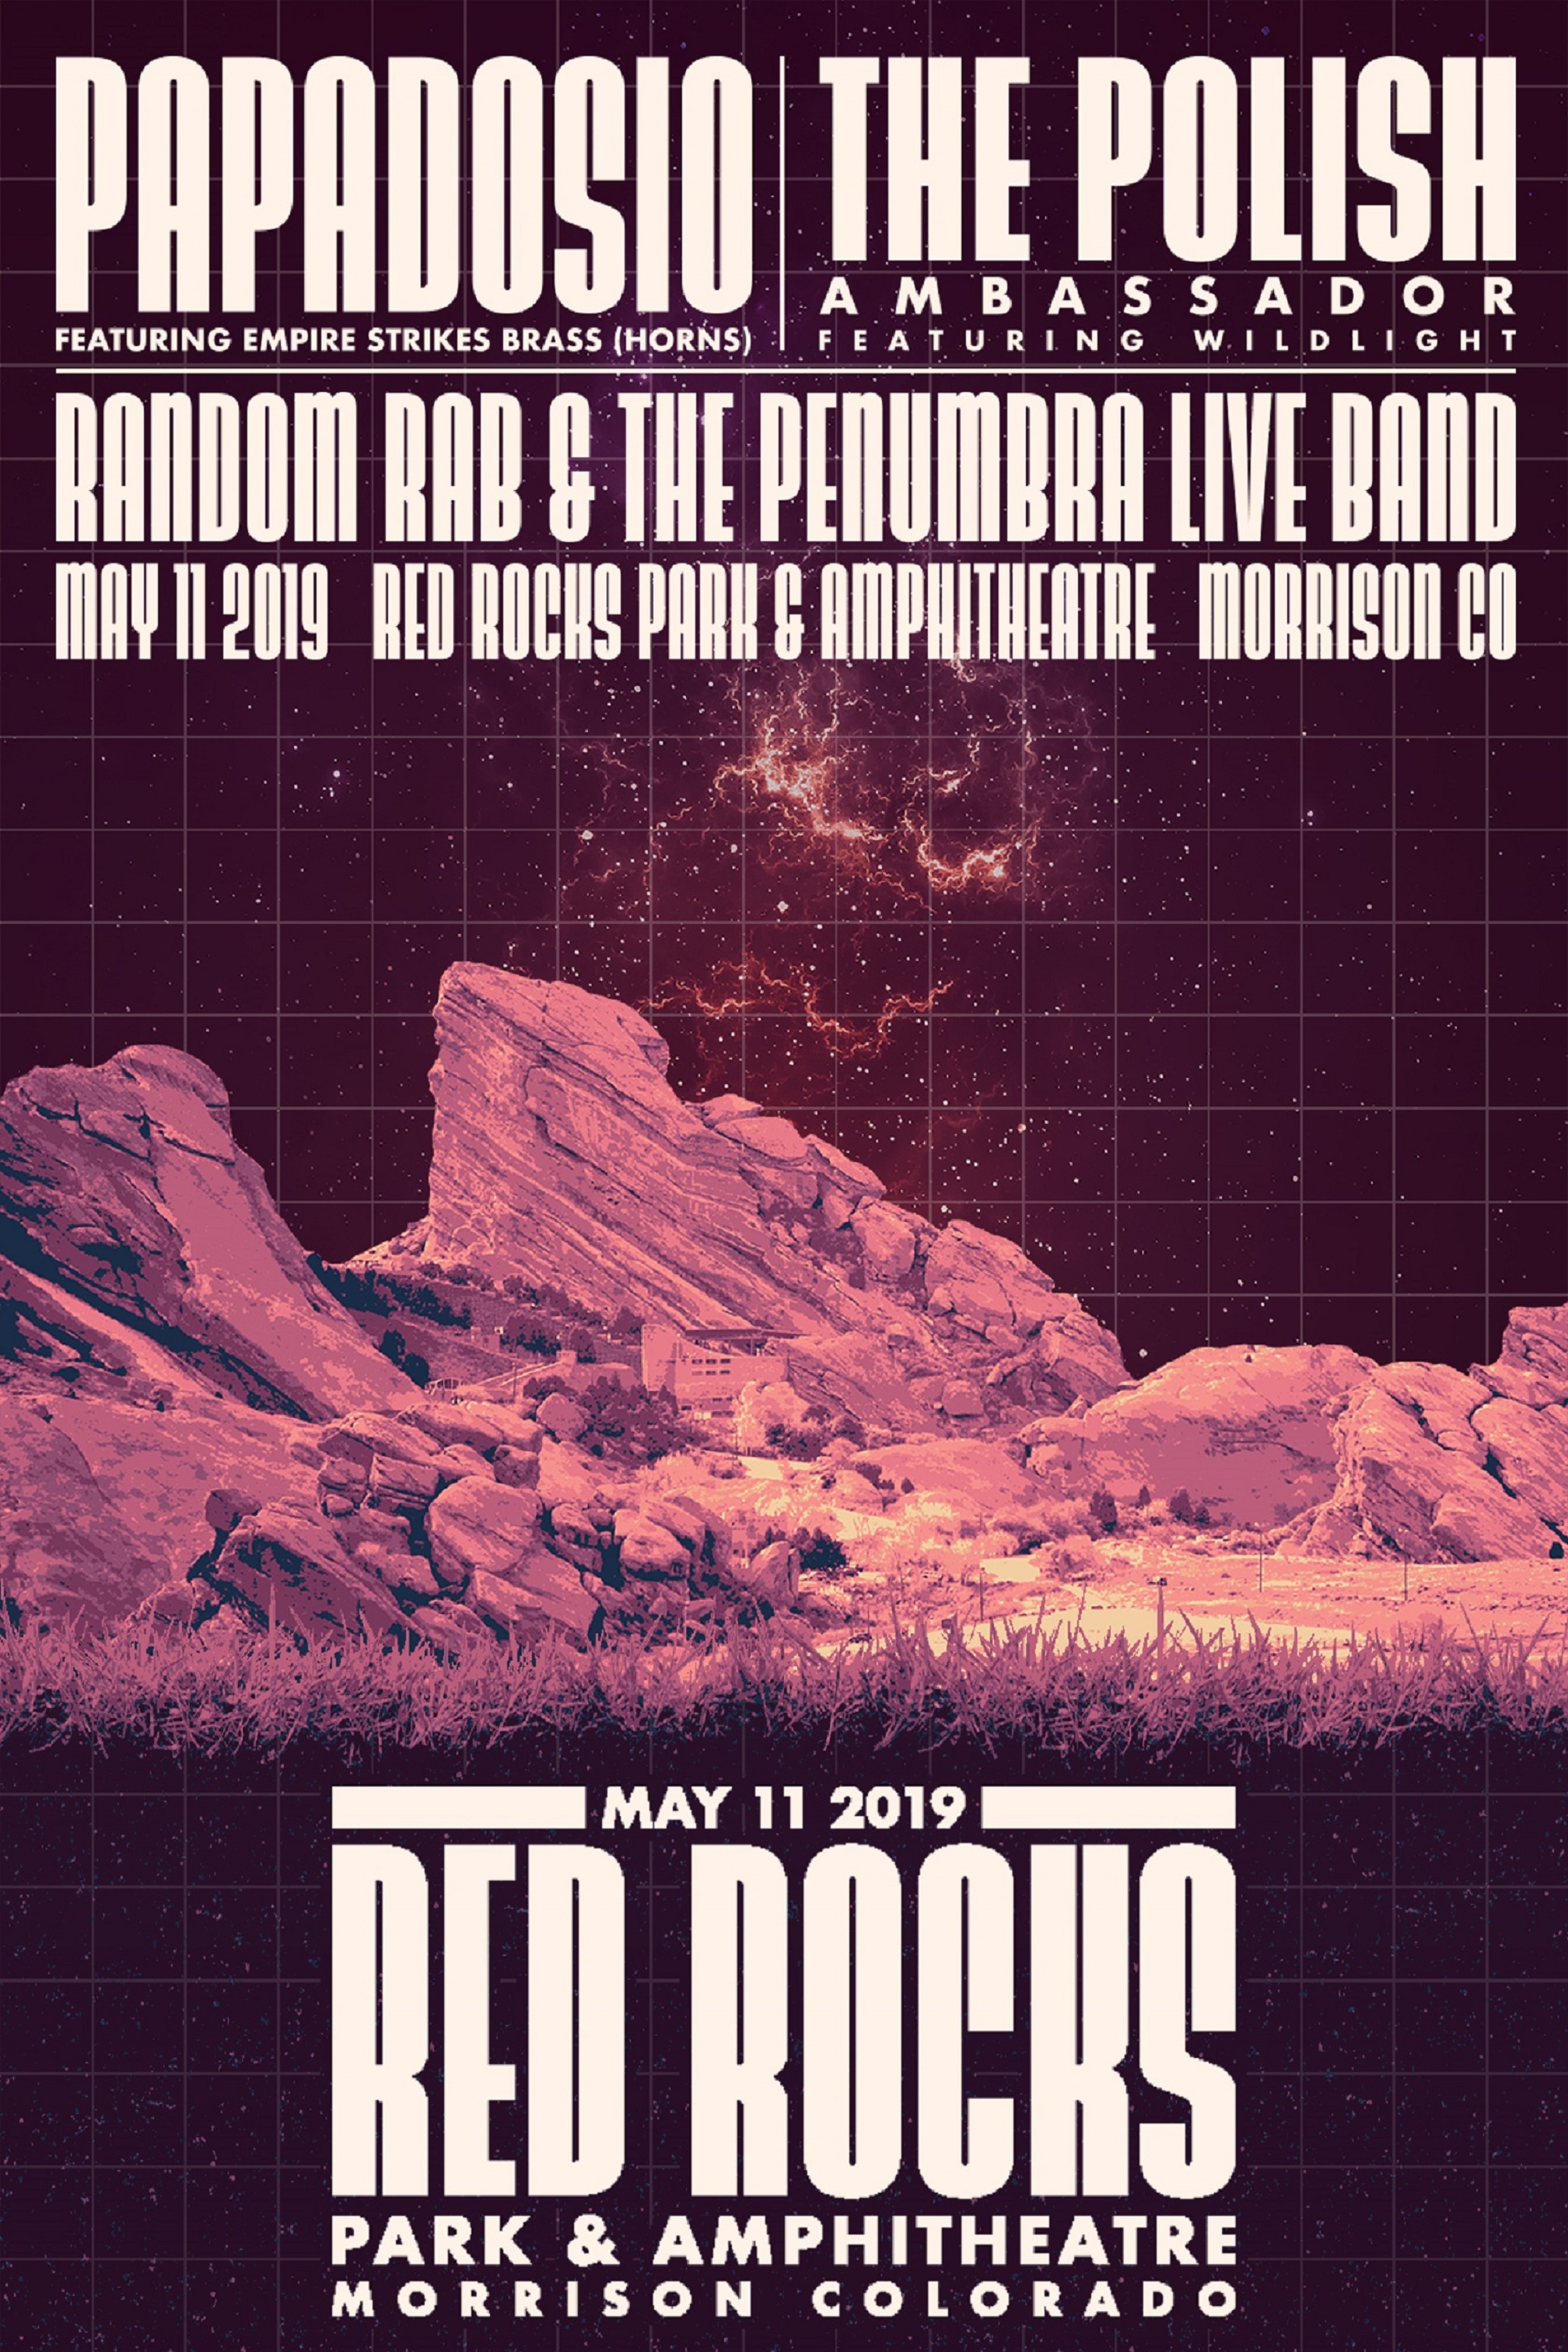 Papadosio will Headline Red Rocks on May 11th!